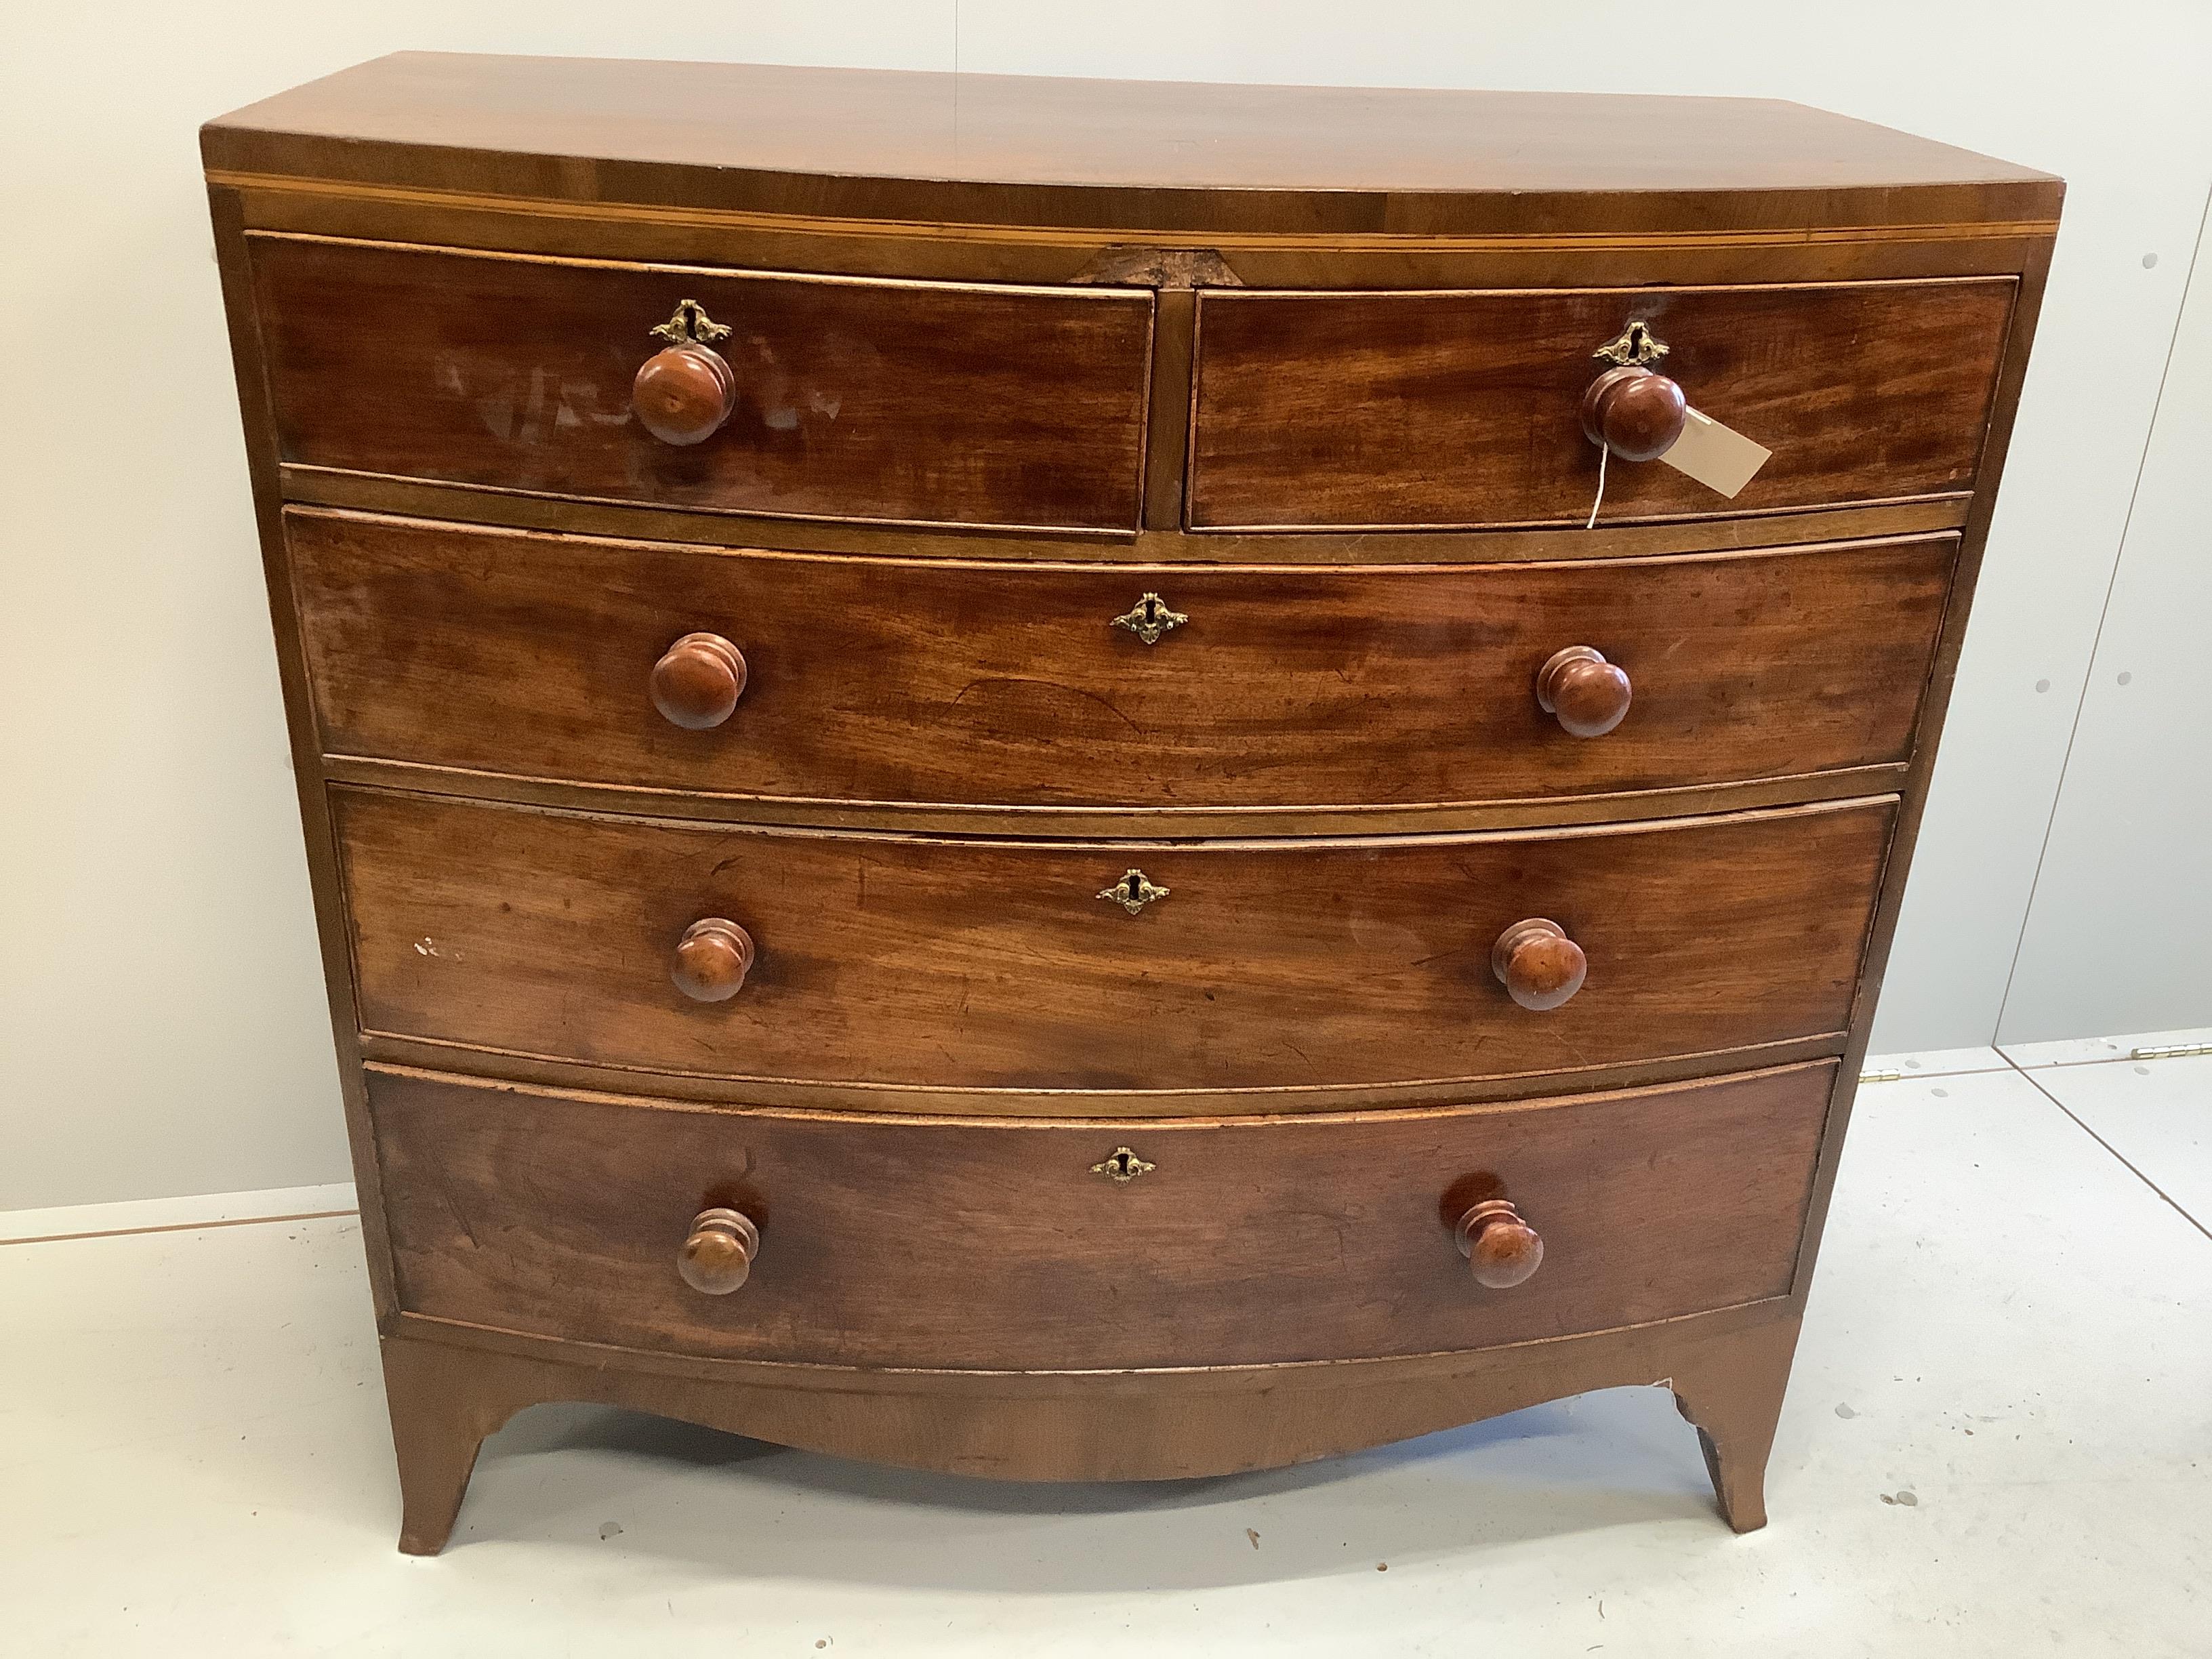 A Regency mahogany bowfront chest, width 107cm, depth 52cm, height 104cm